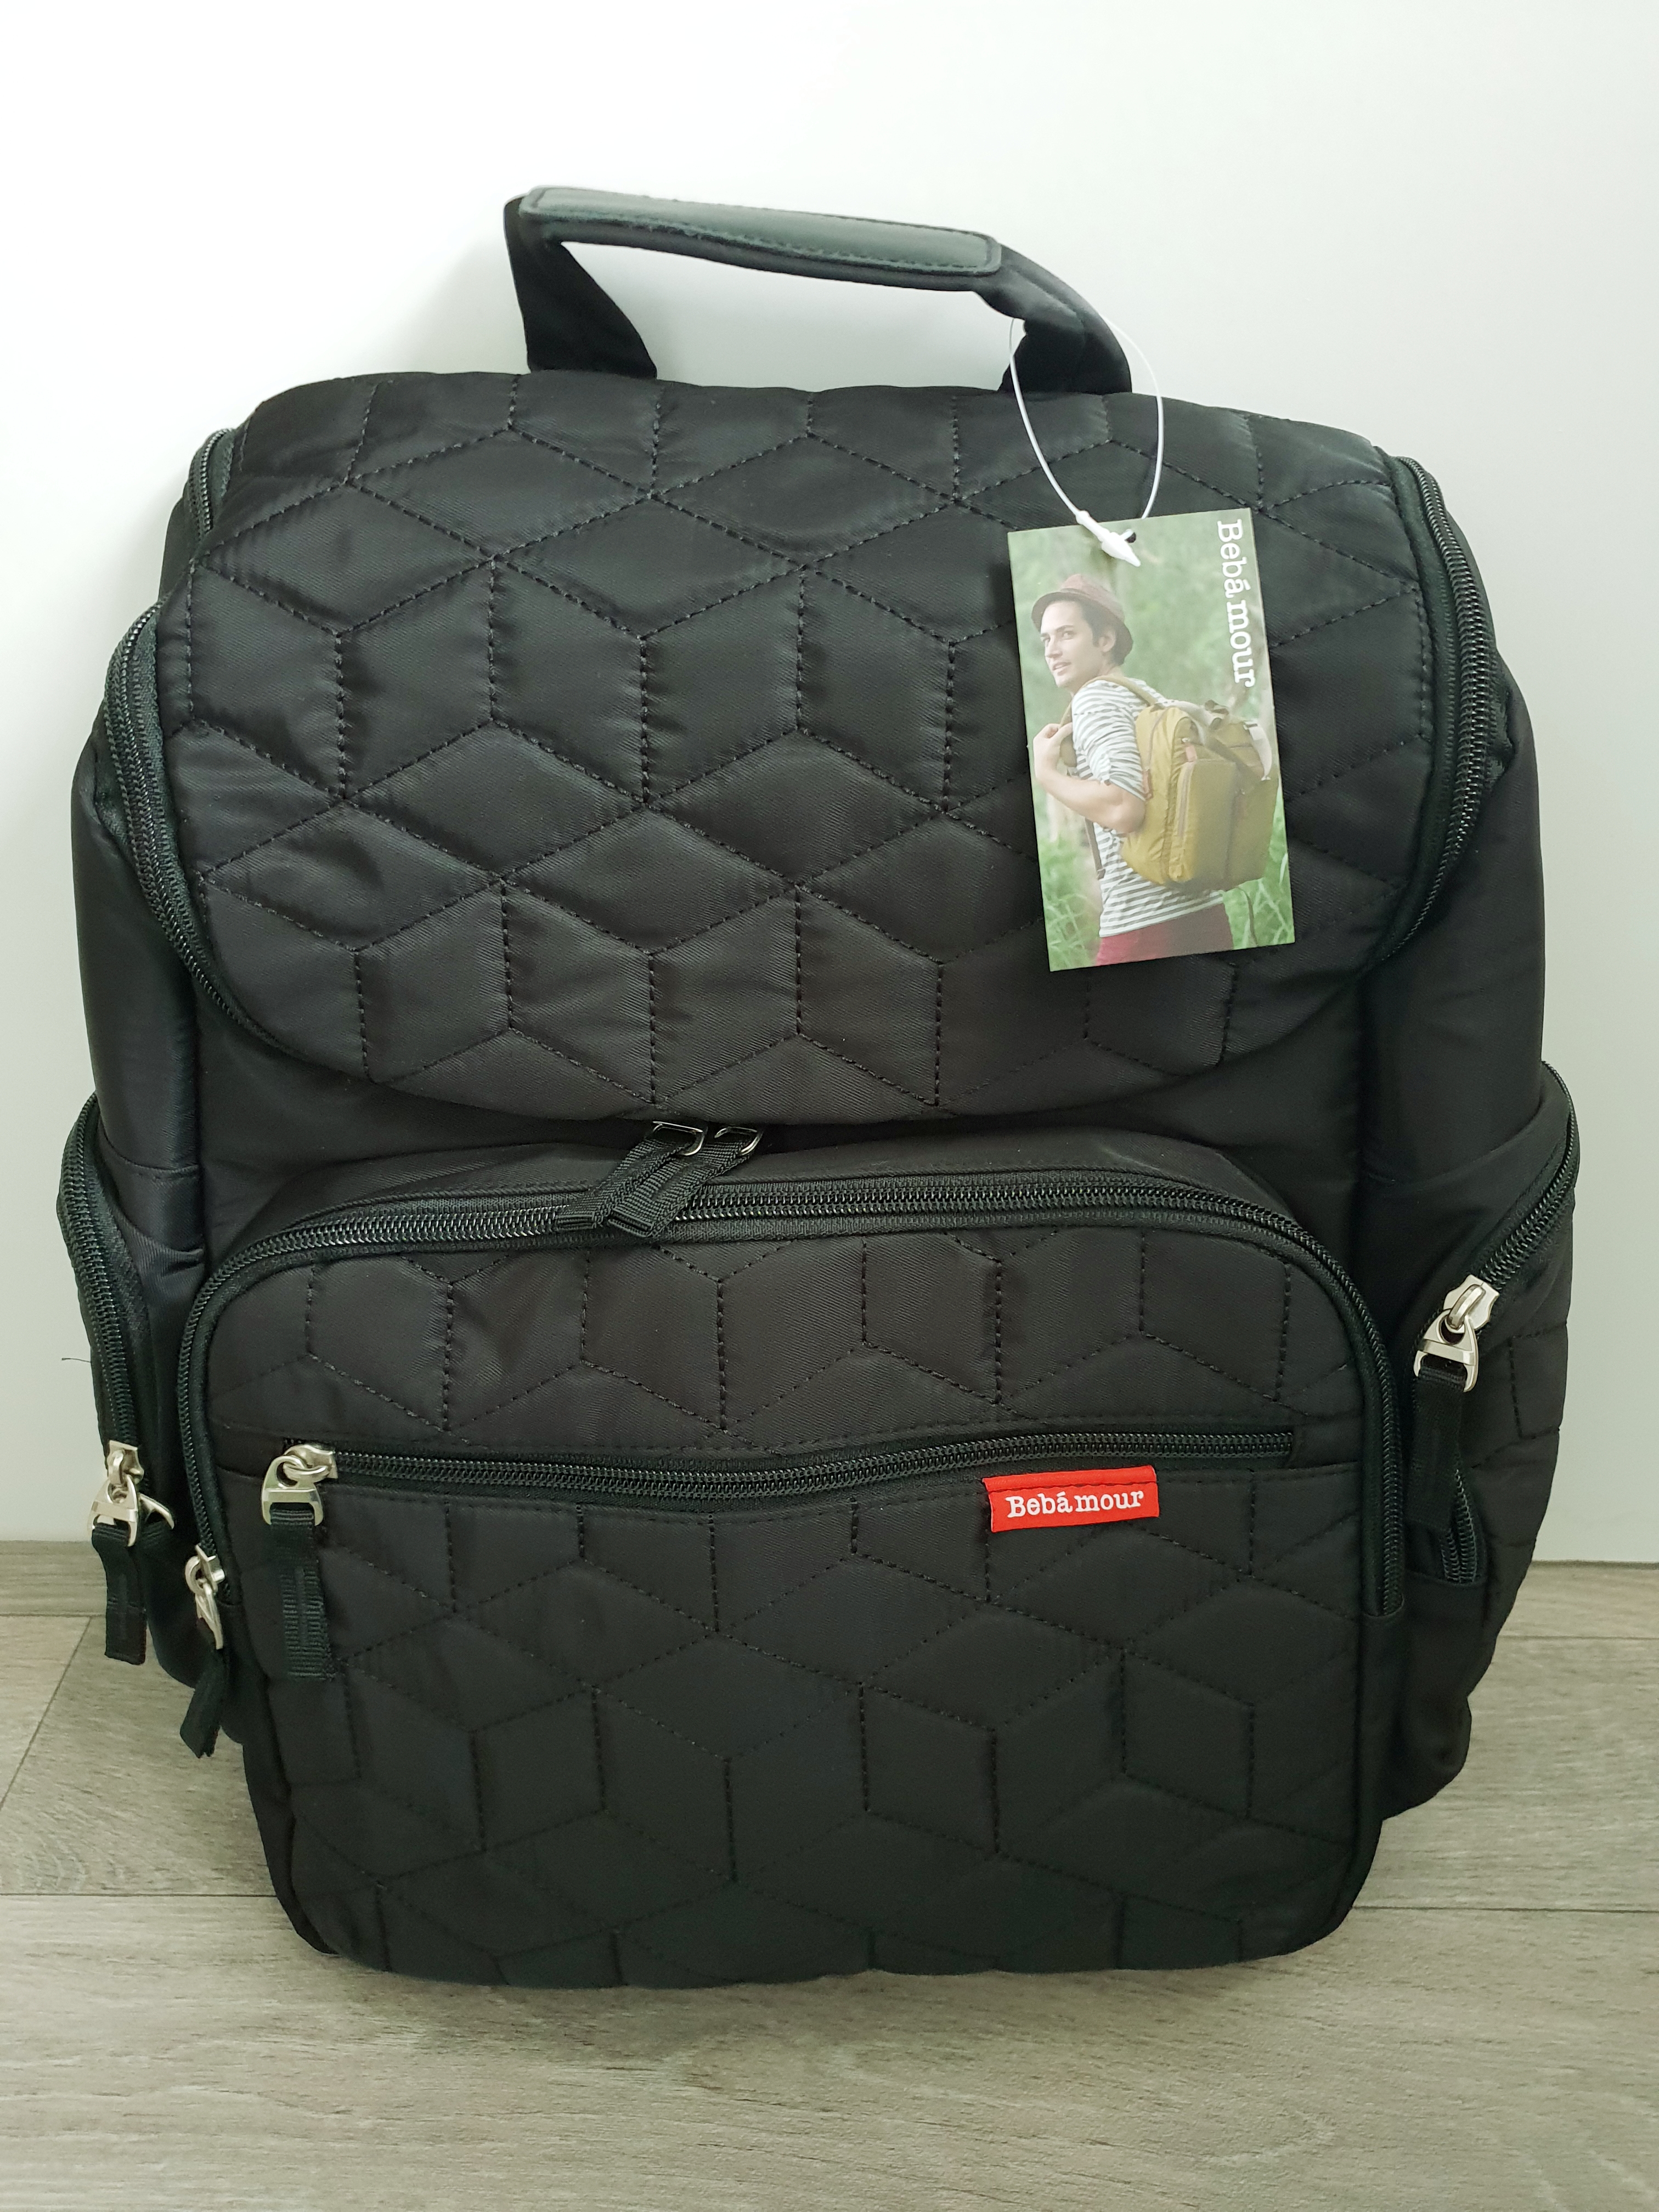 bebamour backpack